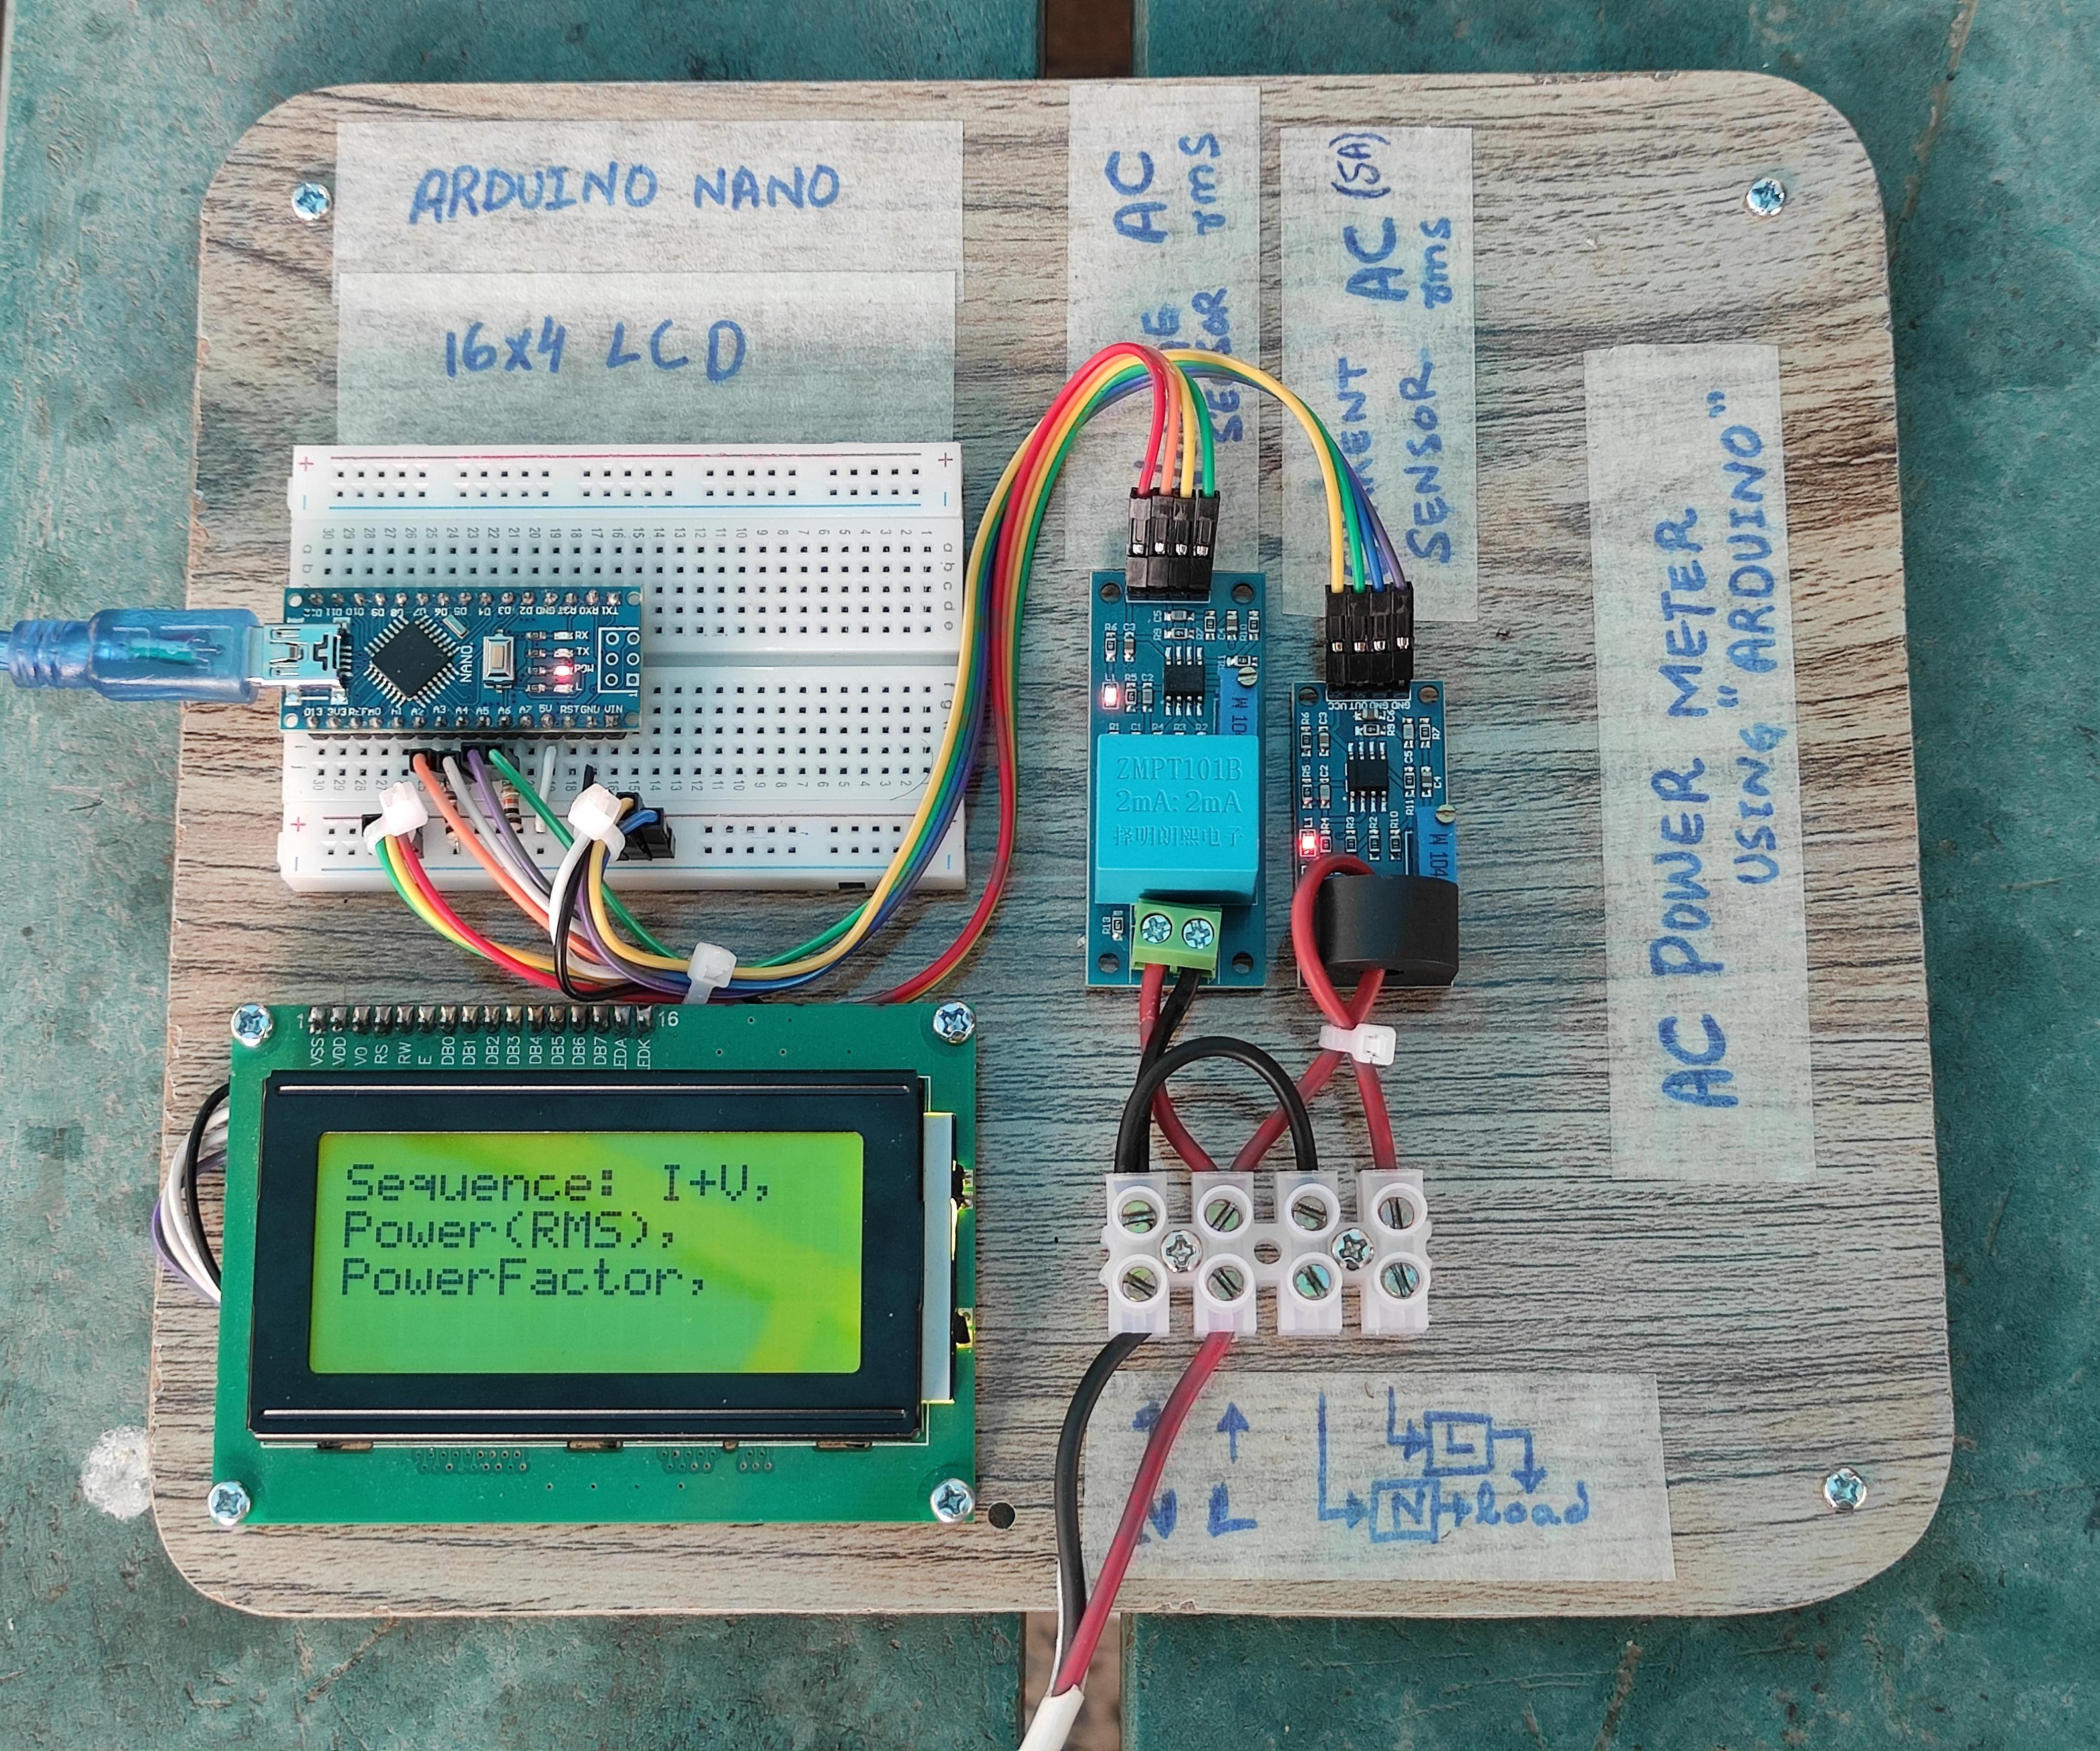 AC Power Meter Using Arduino Nano With Power Factor